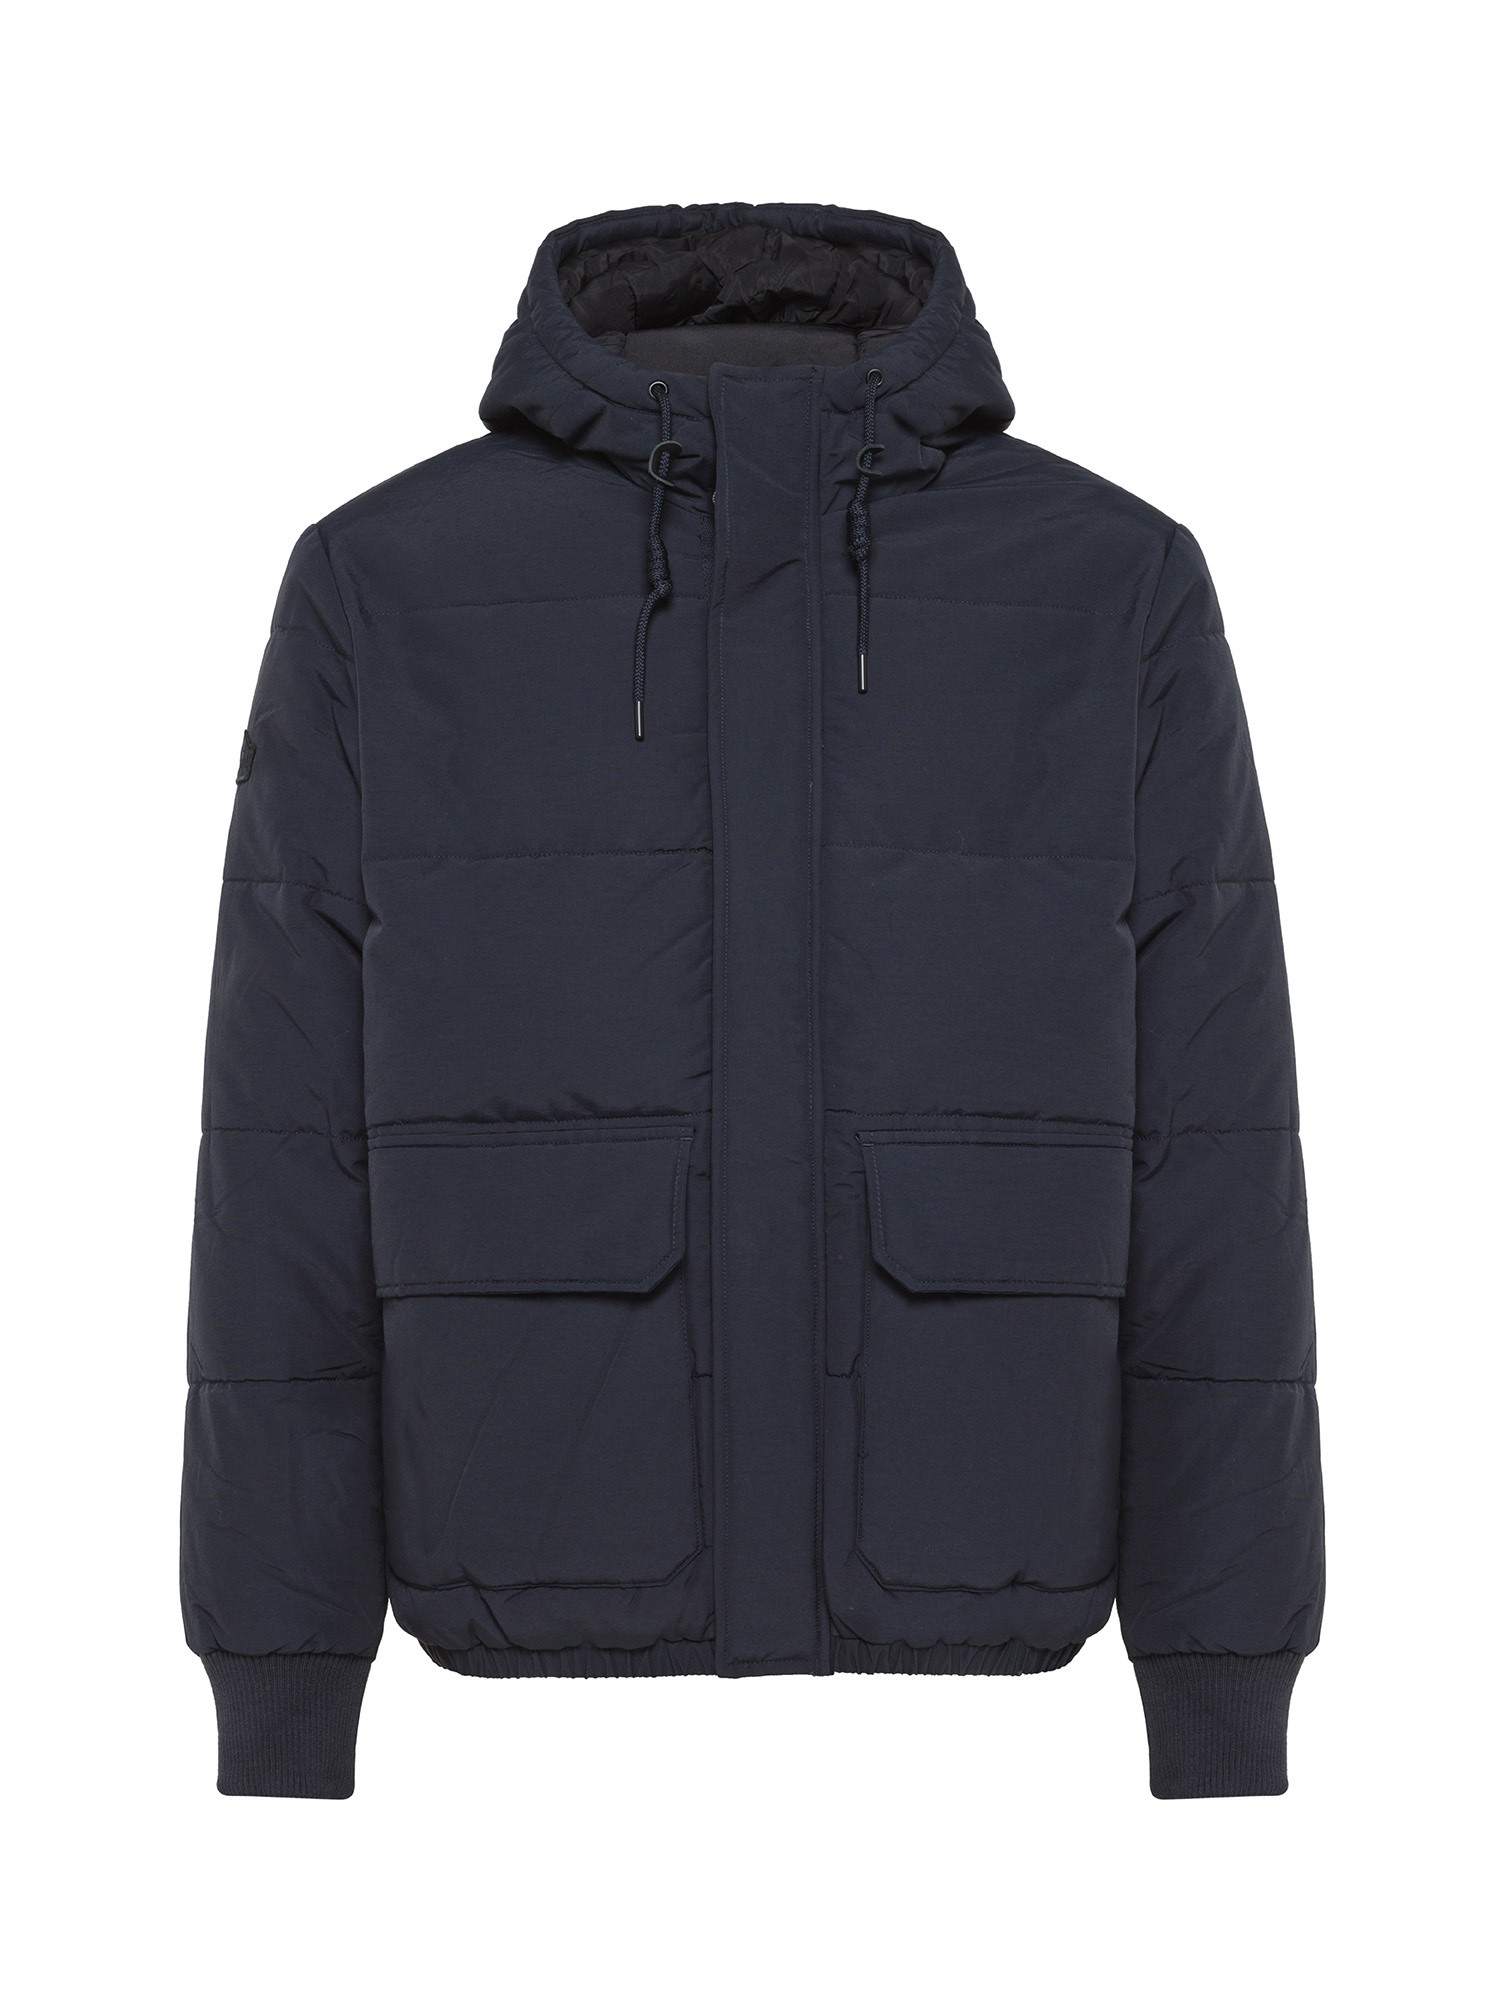 Superdry - Padded down jacket with hood, Dark Blue, large image number 0